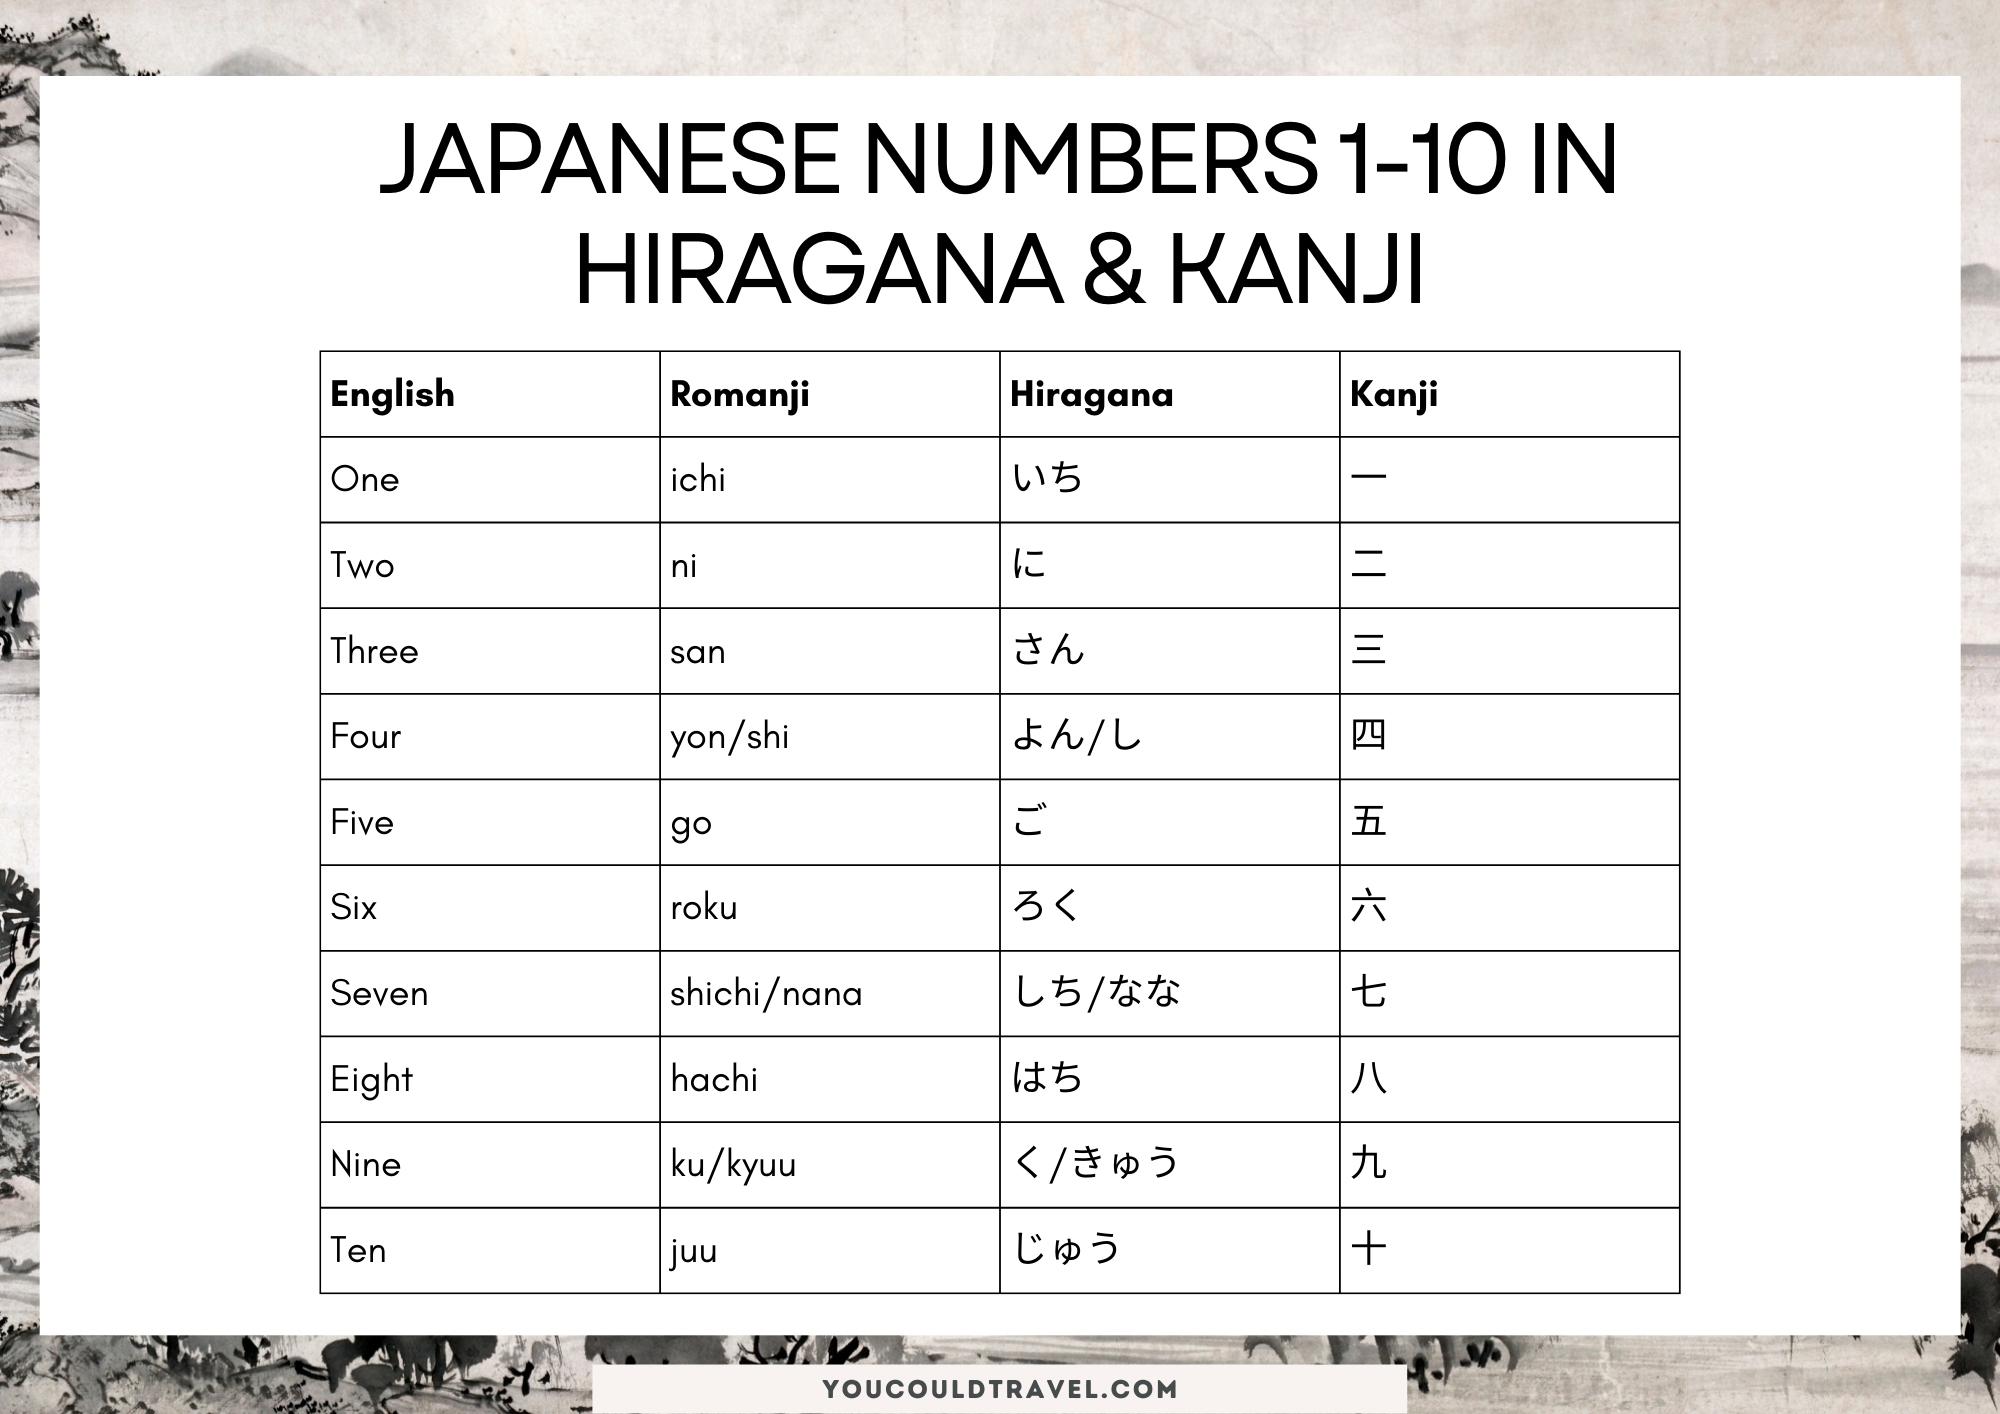 Japanese numbers 1-10 in English, Romanji, Hiragana and Kanji